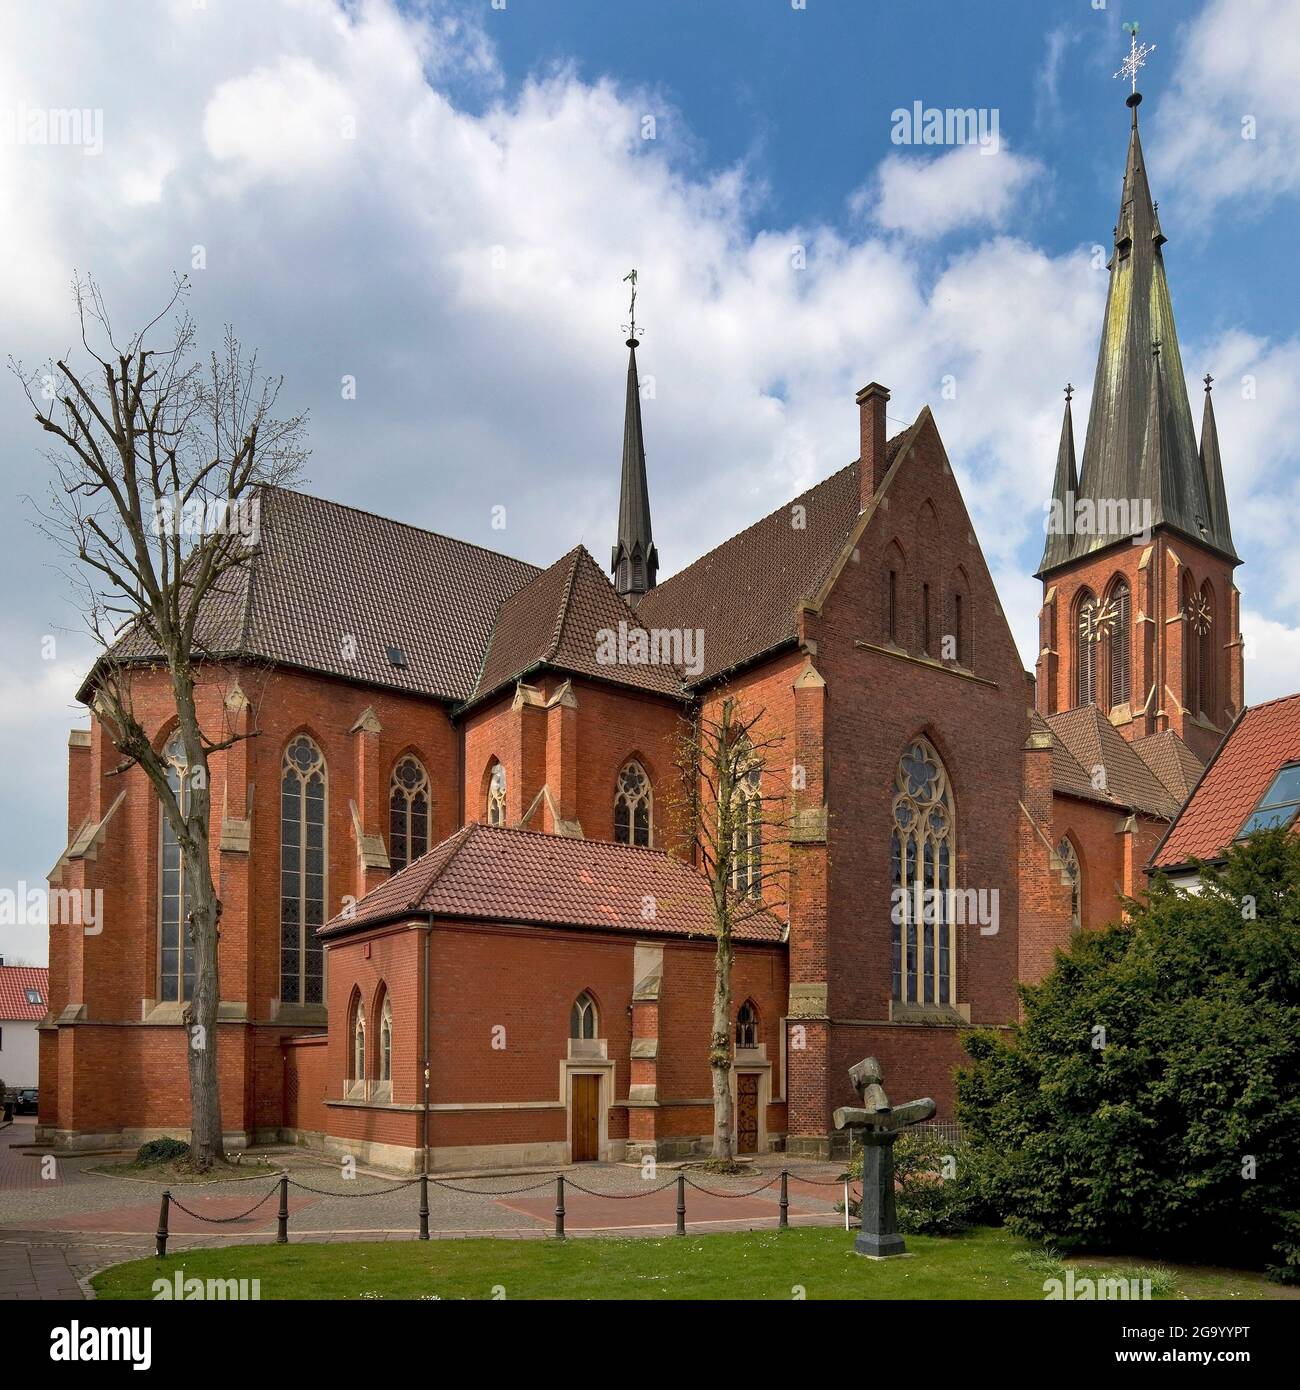 St. Sixtus, neo-Gothic hall church made of red brick, Germany, North Rhine-Westphalia, Haltern am See Stock Photo